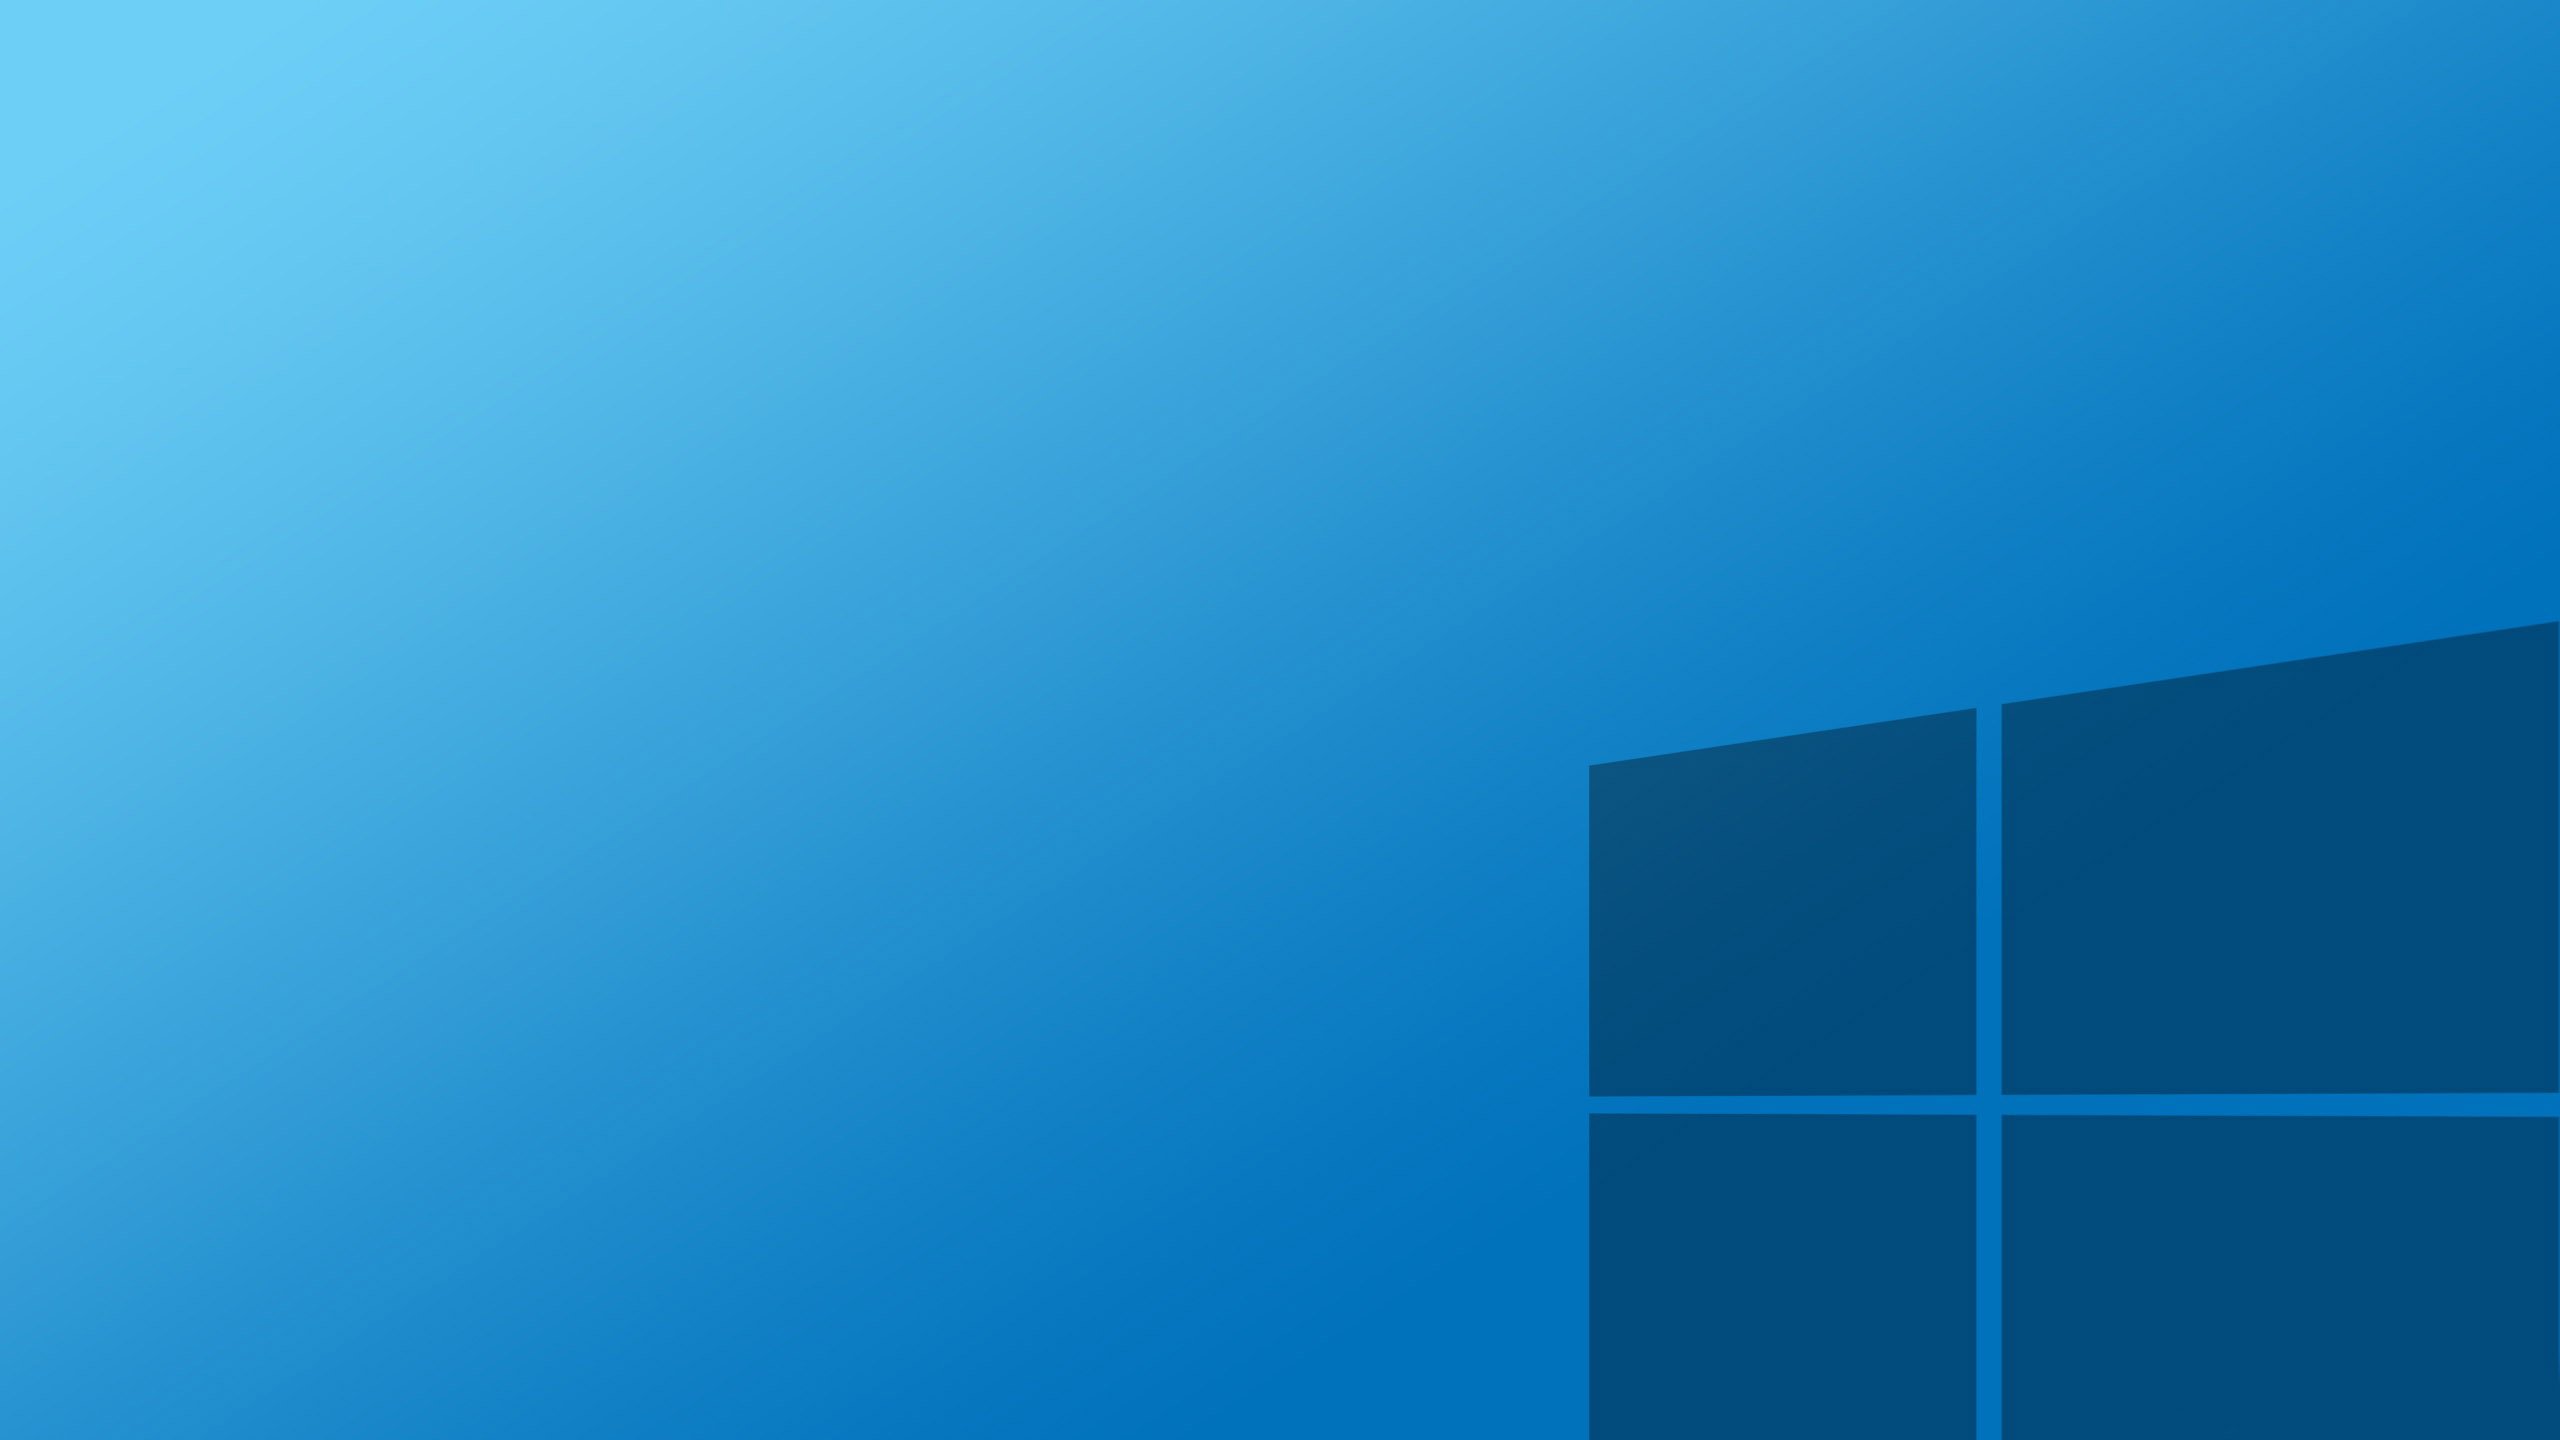 Best Windows 10 Wallpapers 1080p - 2560x1440 Wallpaper 